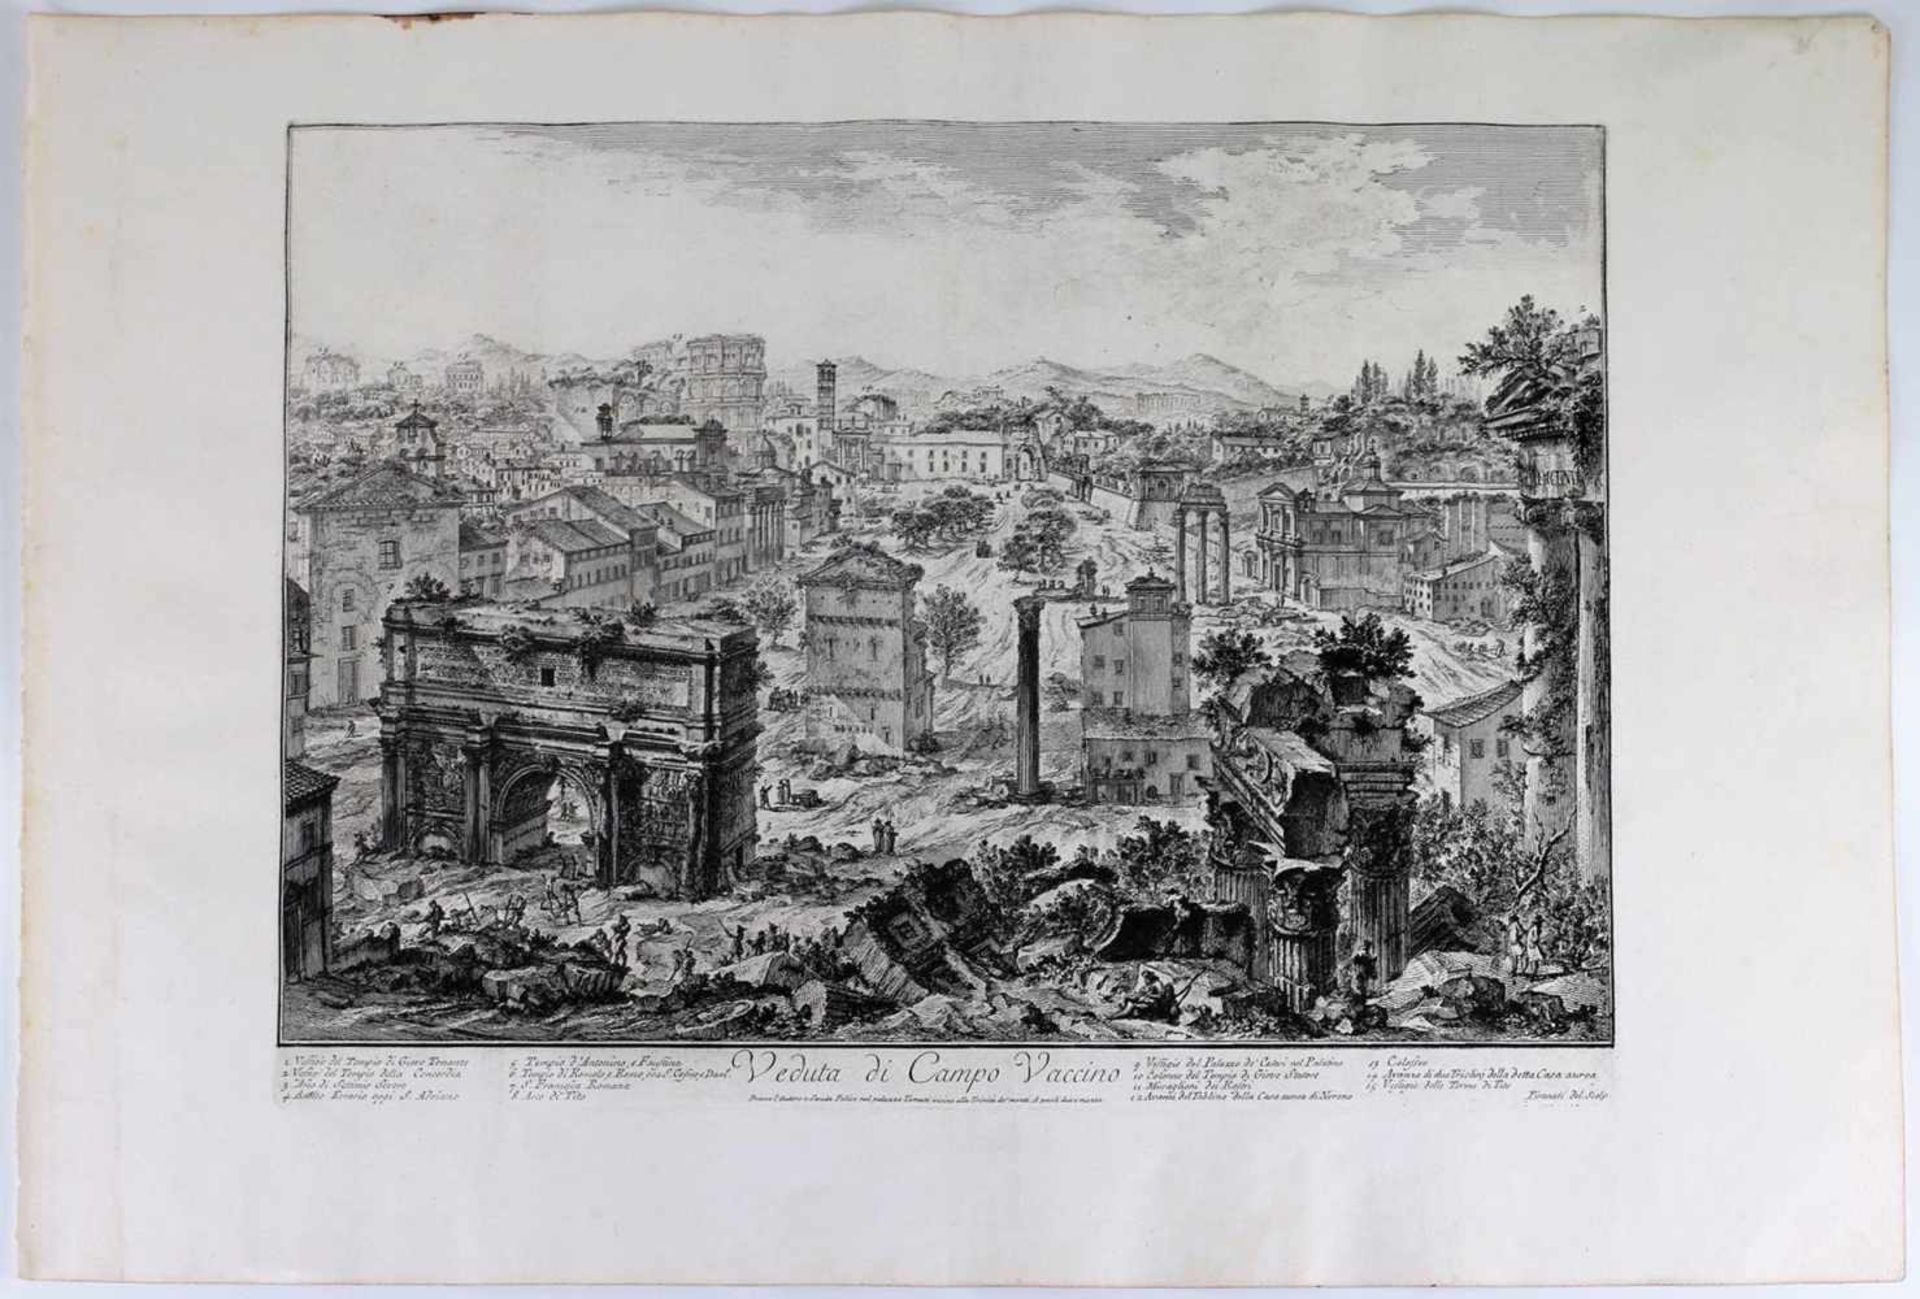 Piranesi, G.B. Veduta di Campo Vaccino, Roma. Mid XVIII century. Engraving on copper, Laid